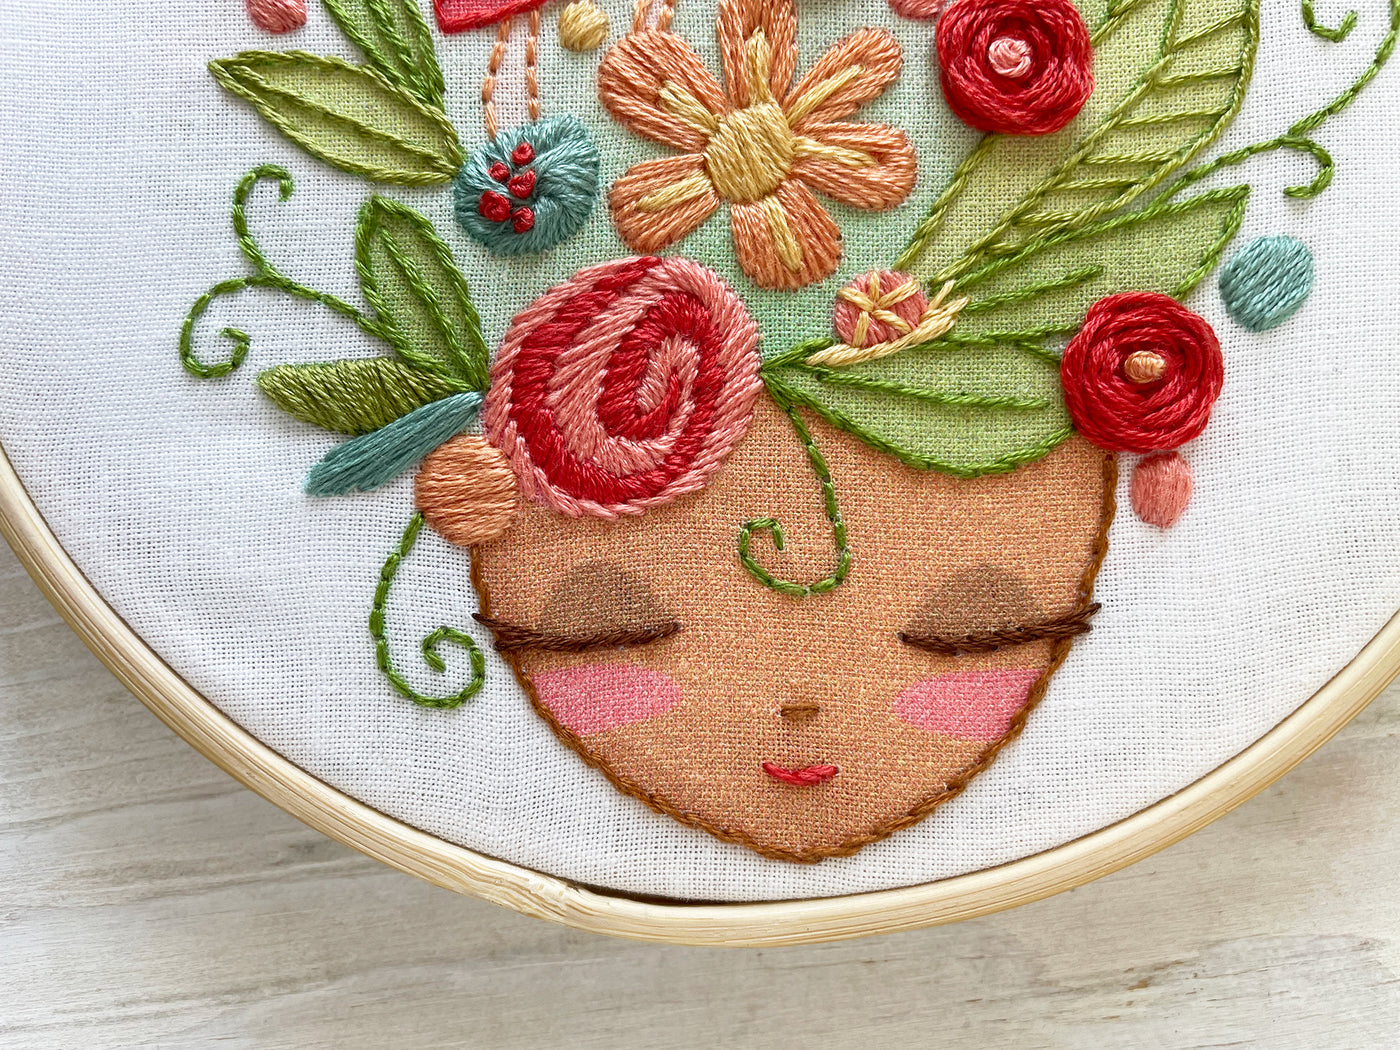 Garden Goddess Floral Hand Embroidery pattern